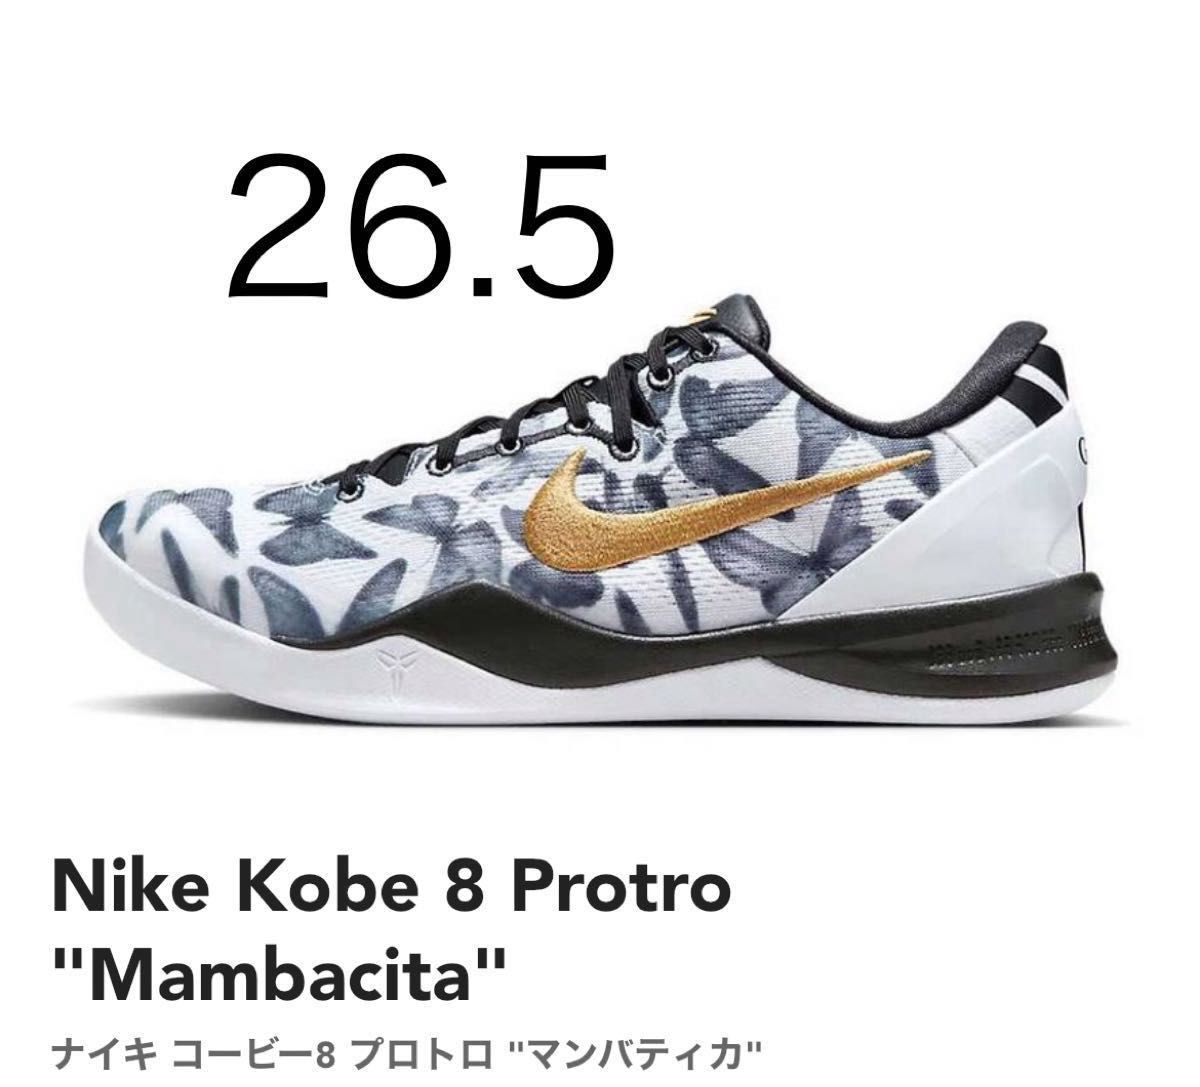 Nike Kobe 8 Protro "Mambacita"ナイキ コービー8 プロトロ "マンバティカ"